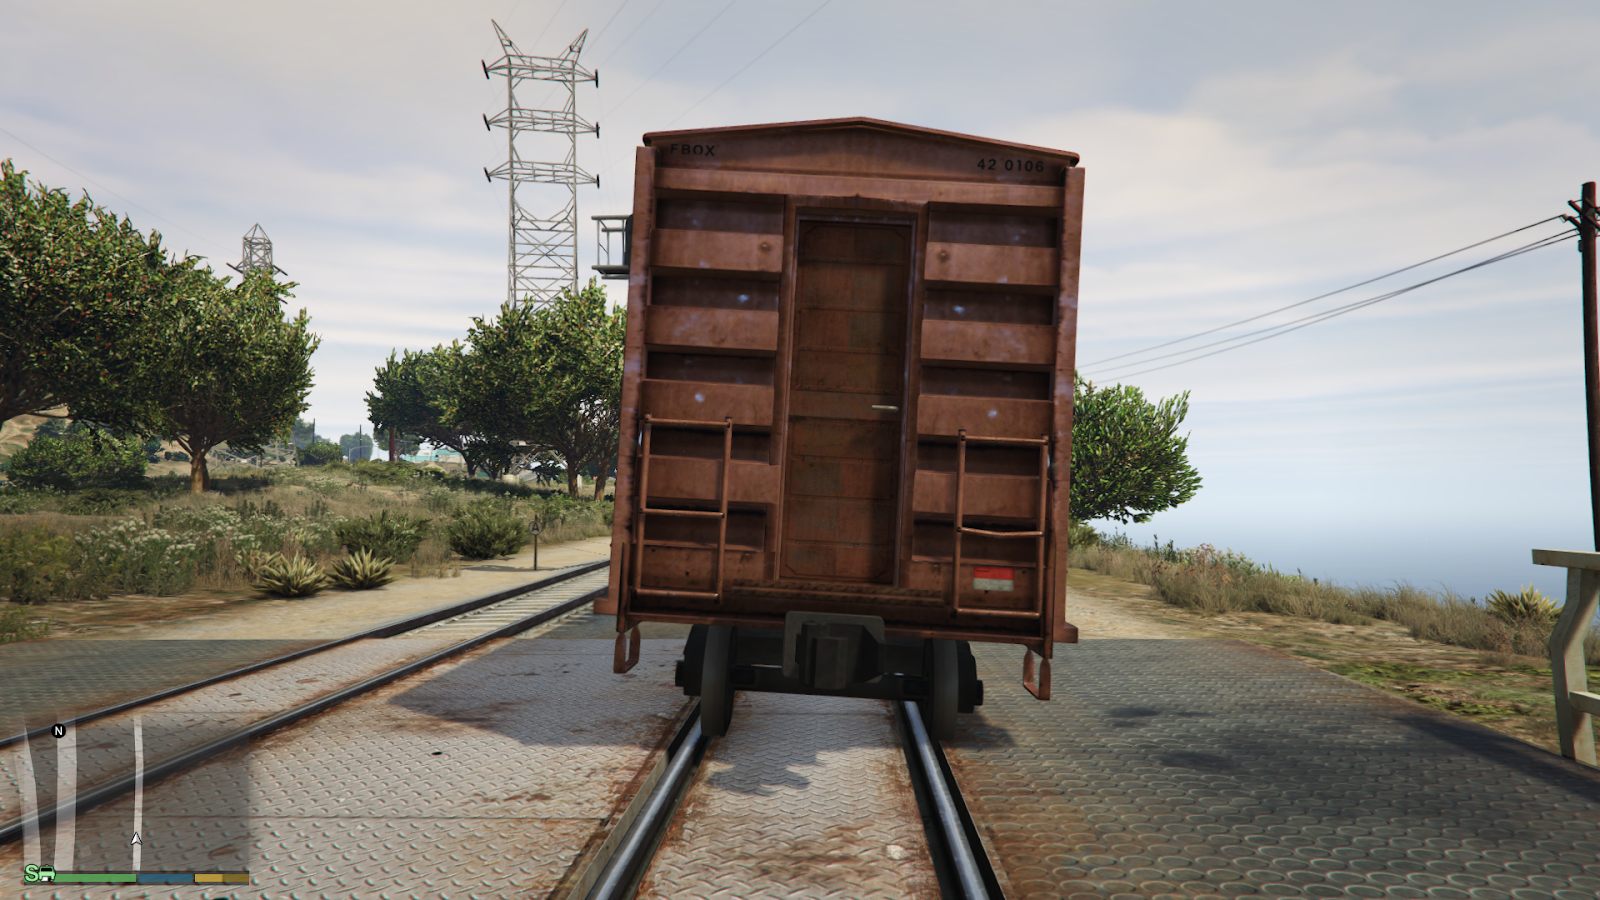 Freight Train(Grain Car) in GTA V